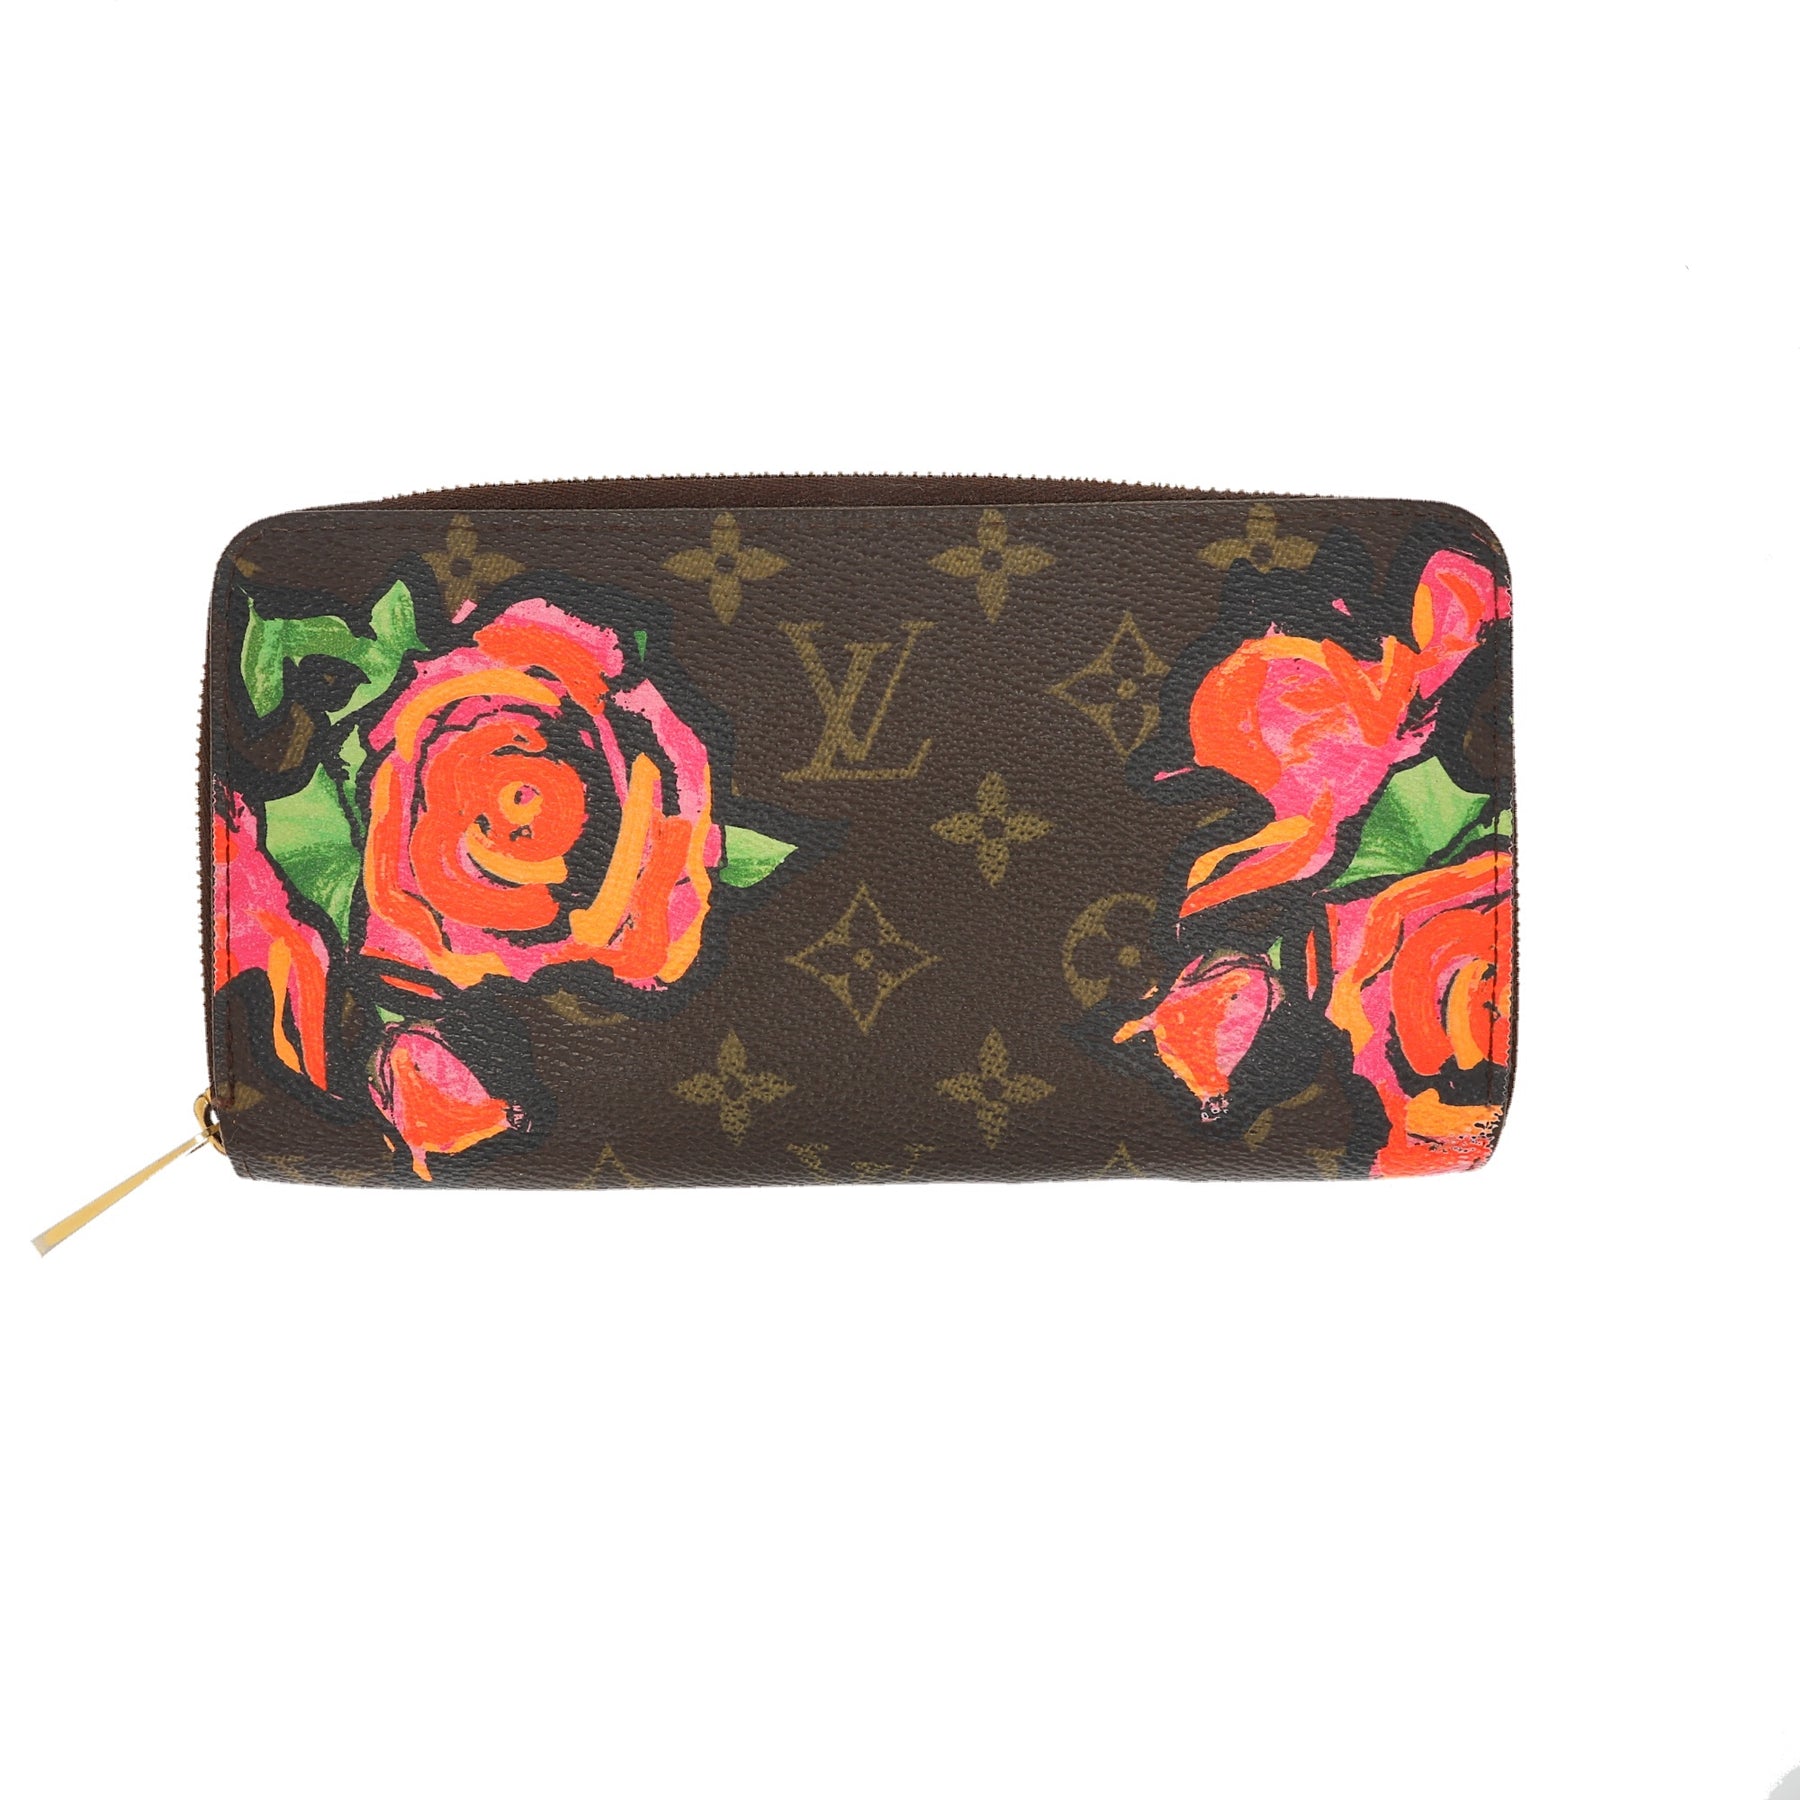 LovelyAuthentic Louis Vuitton Stephen Sprouse Roses/Monogram